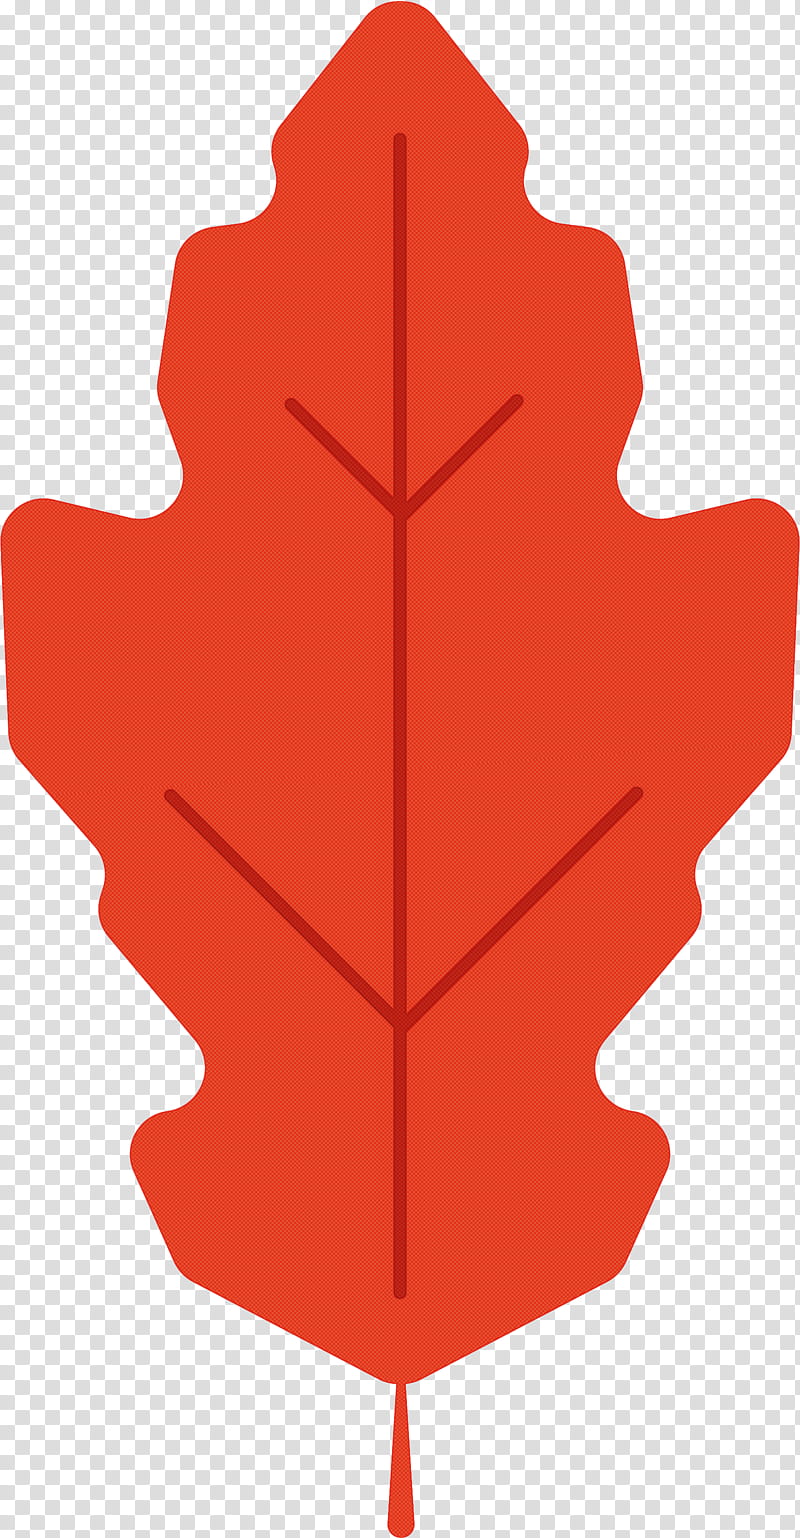 Maple leaf, Red Maple, Tree, Floral Design, Diagram, Cartoon, Plant Structure, Plants transparent background PNG clipart